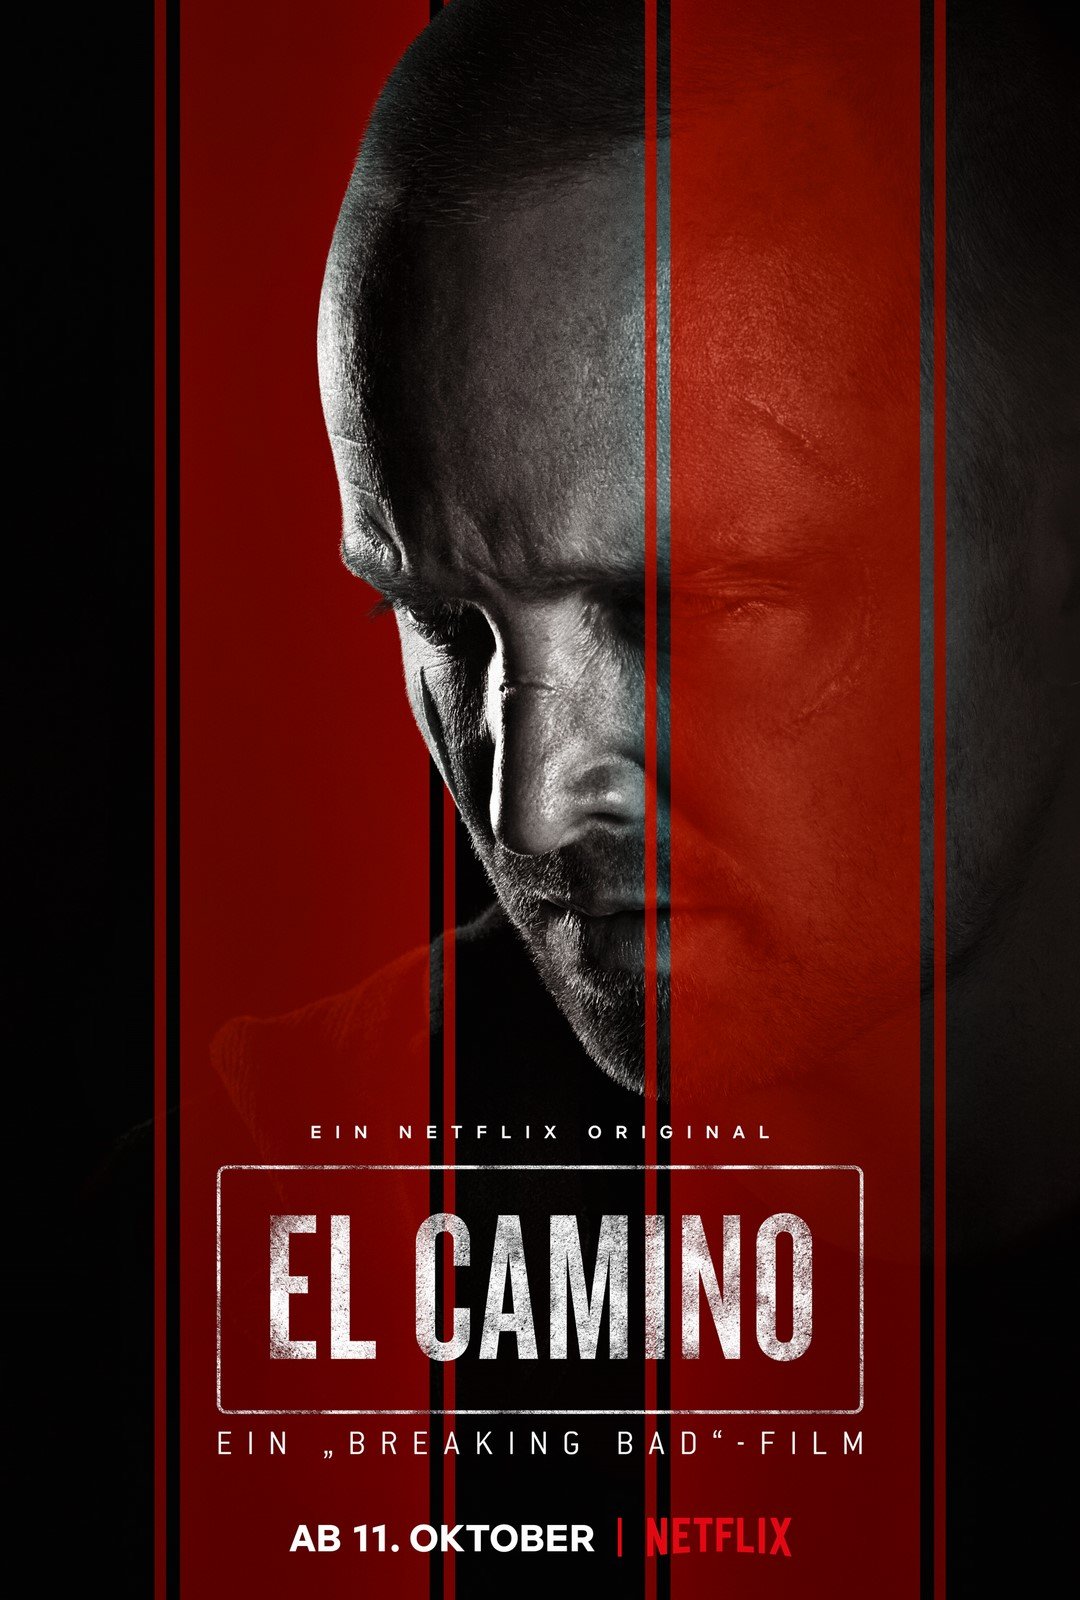 El Camino Ein "Breaking Bad" Film Film 2019 FILMSTARTS.de